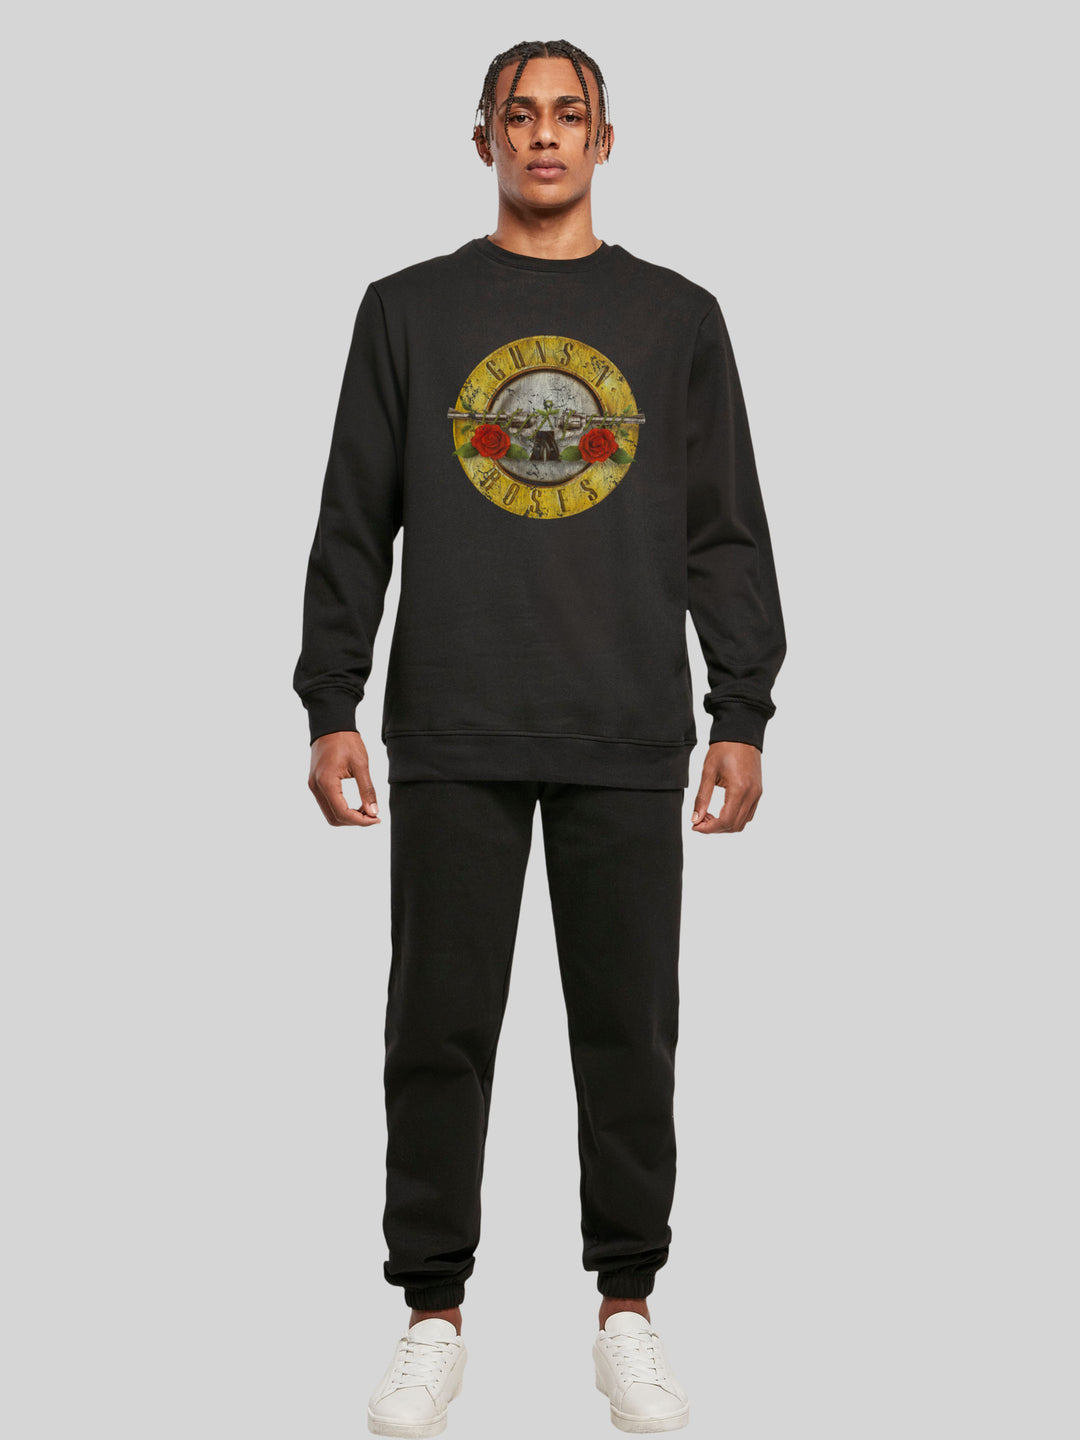 Guns 'n' Roses Sweatshirt | Vintage Classic Logo Herren | Longsleeve Sweater